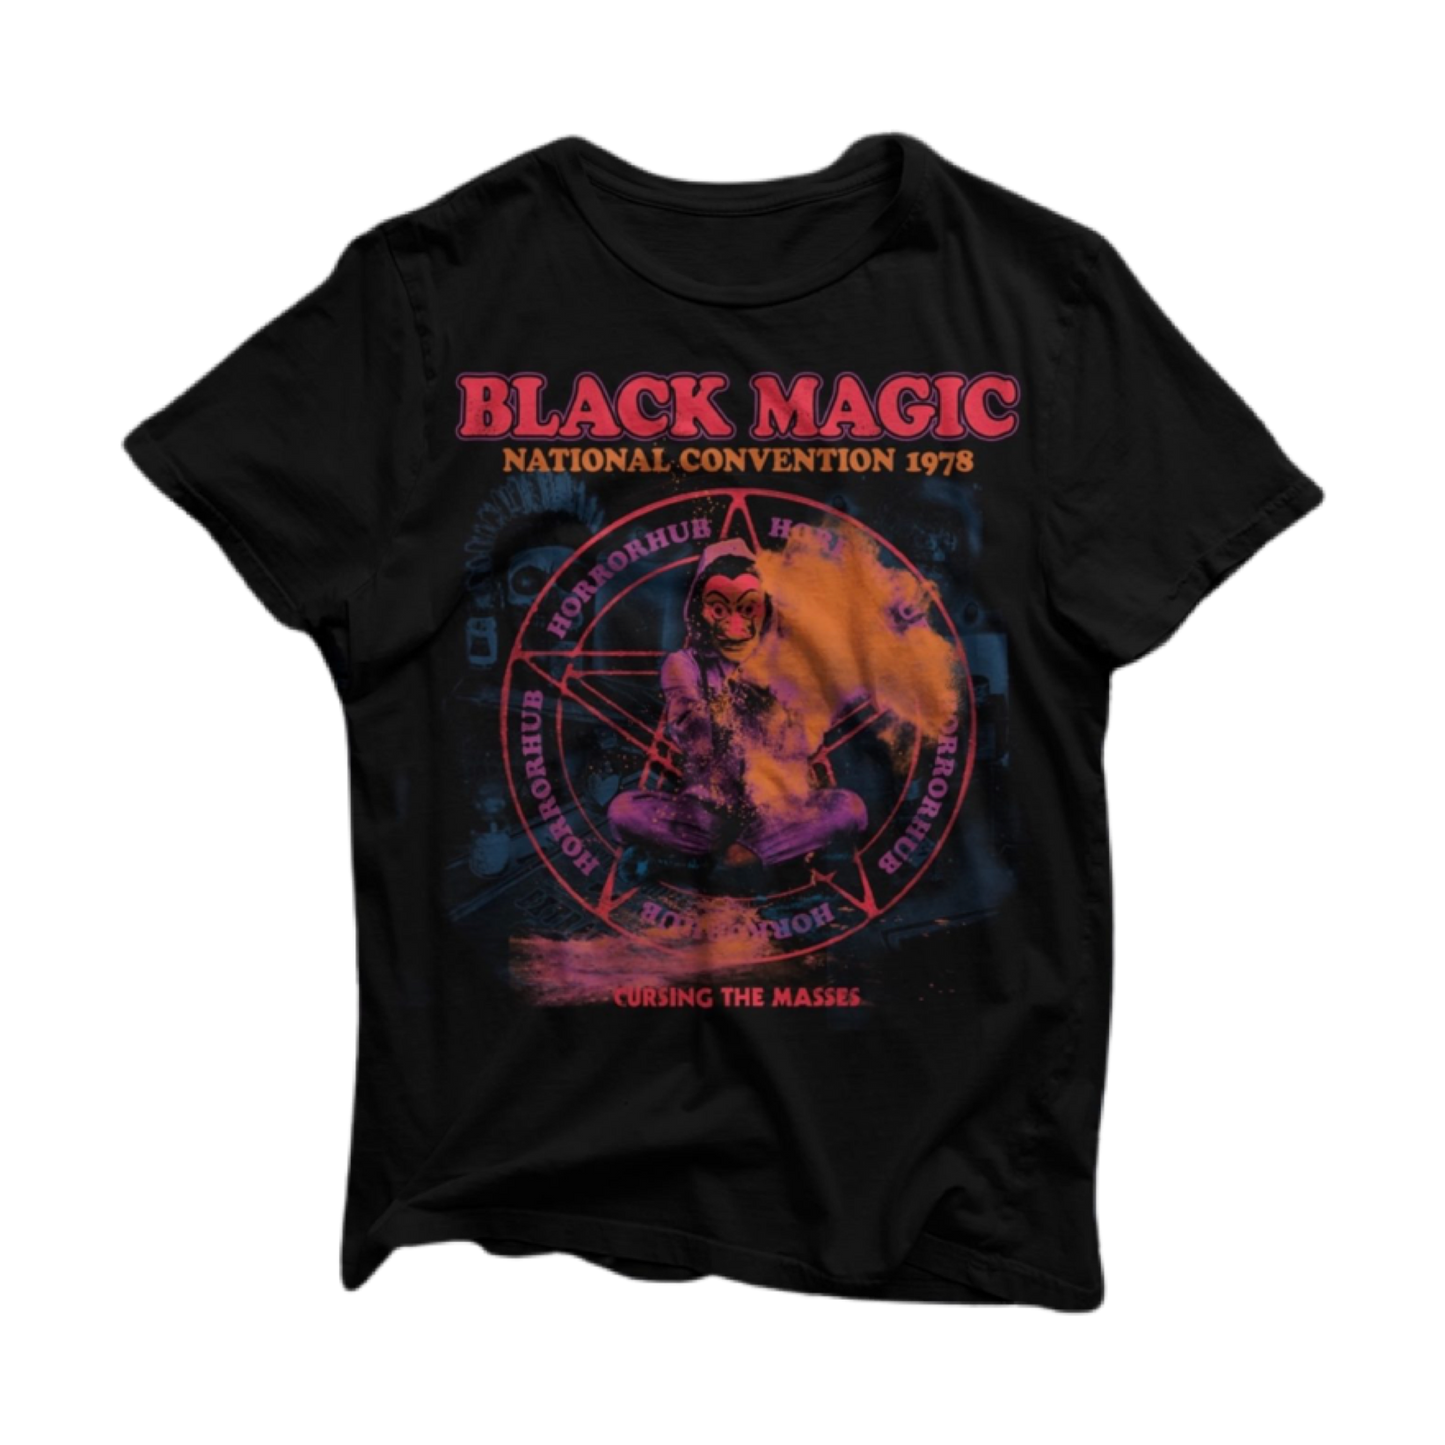 Black Magic tee